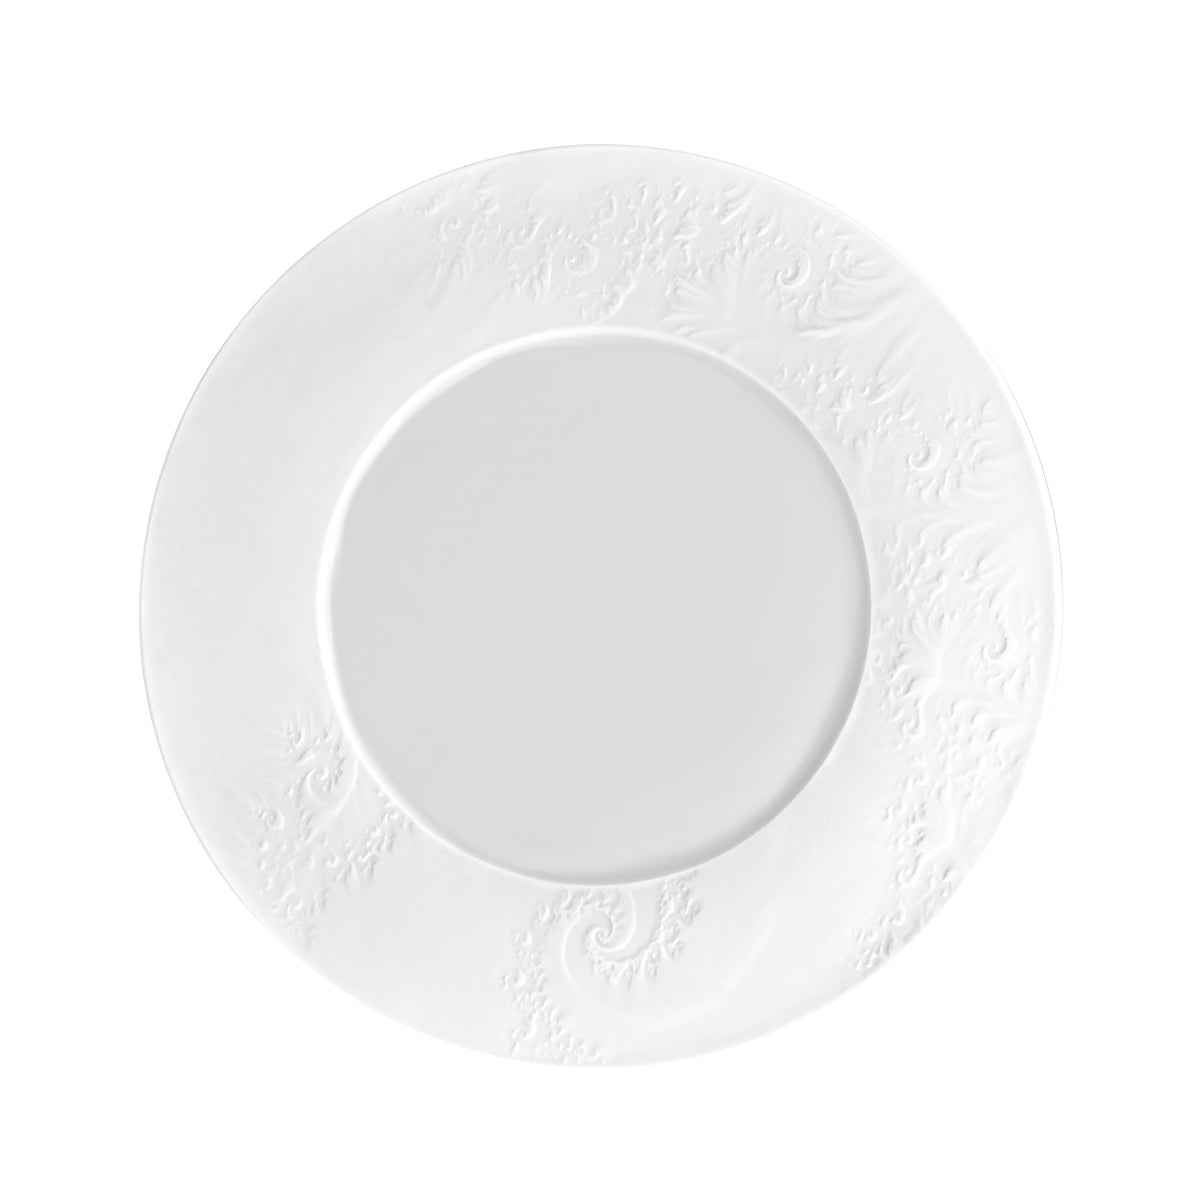 TURBULENCE - Assiette plate